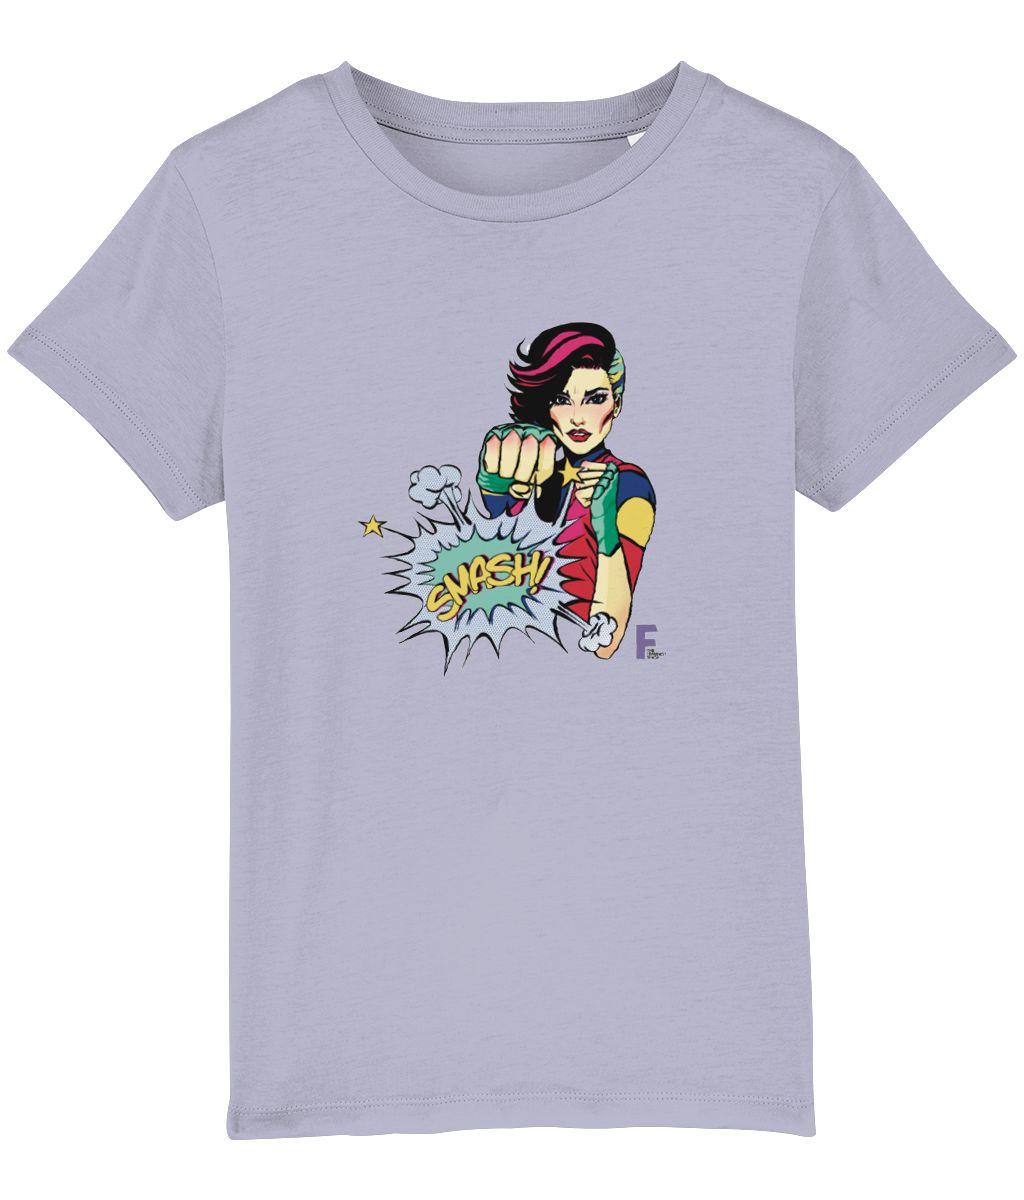 Kids Organic Feminist T Shirt - Smash it